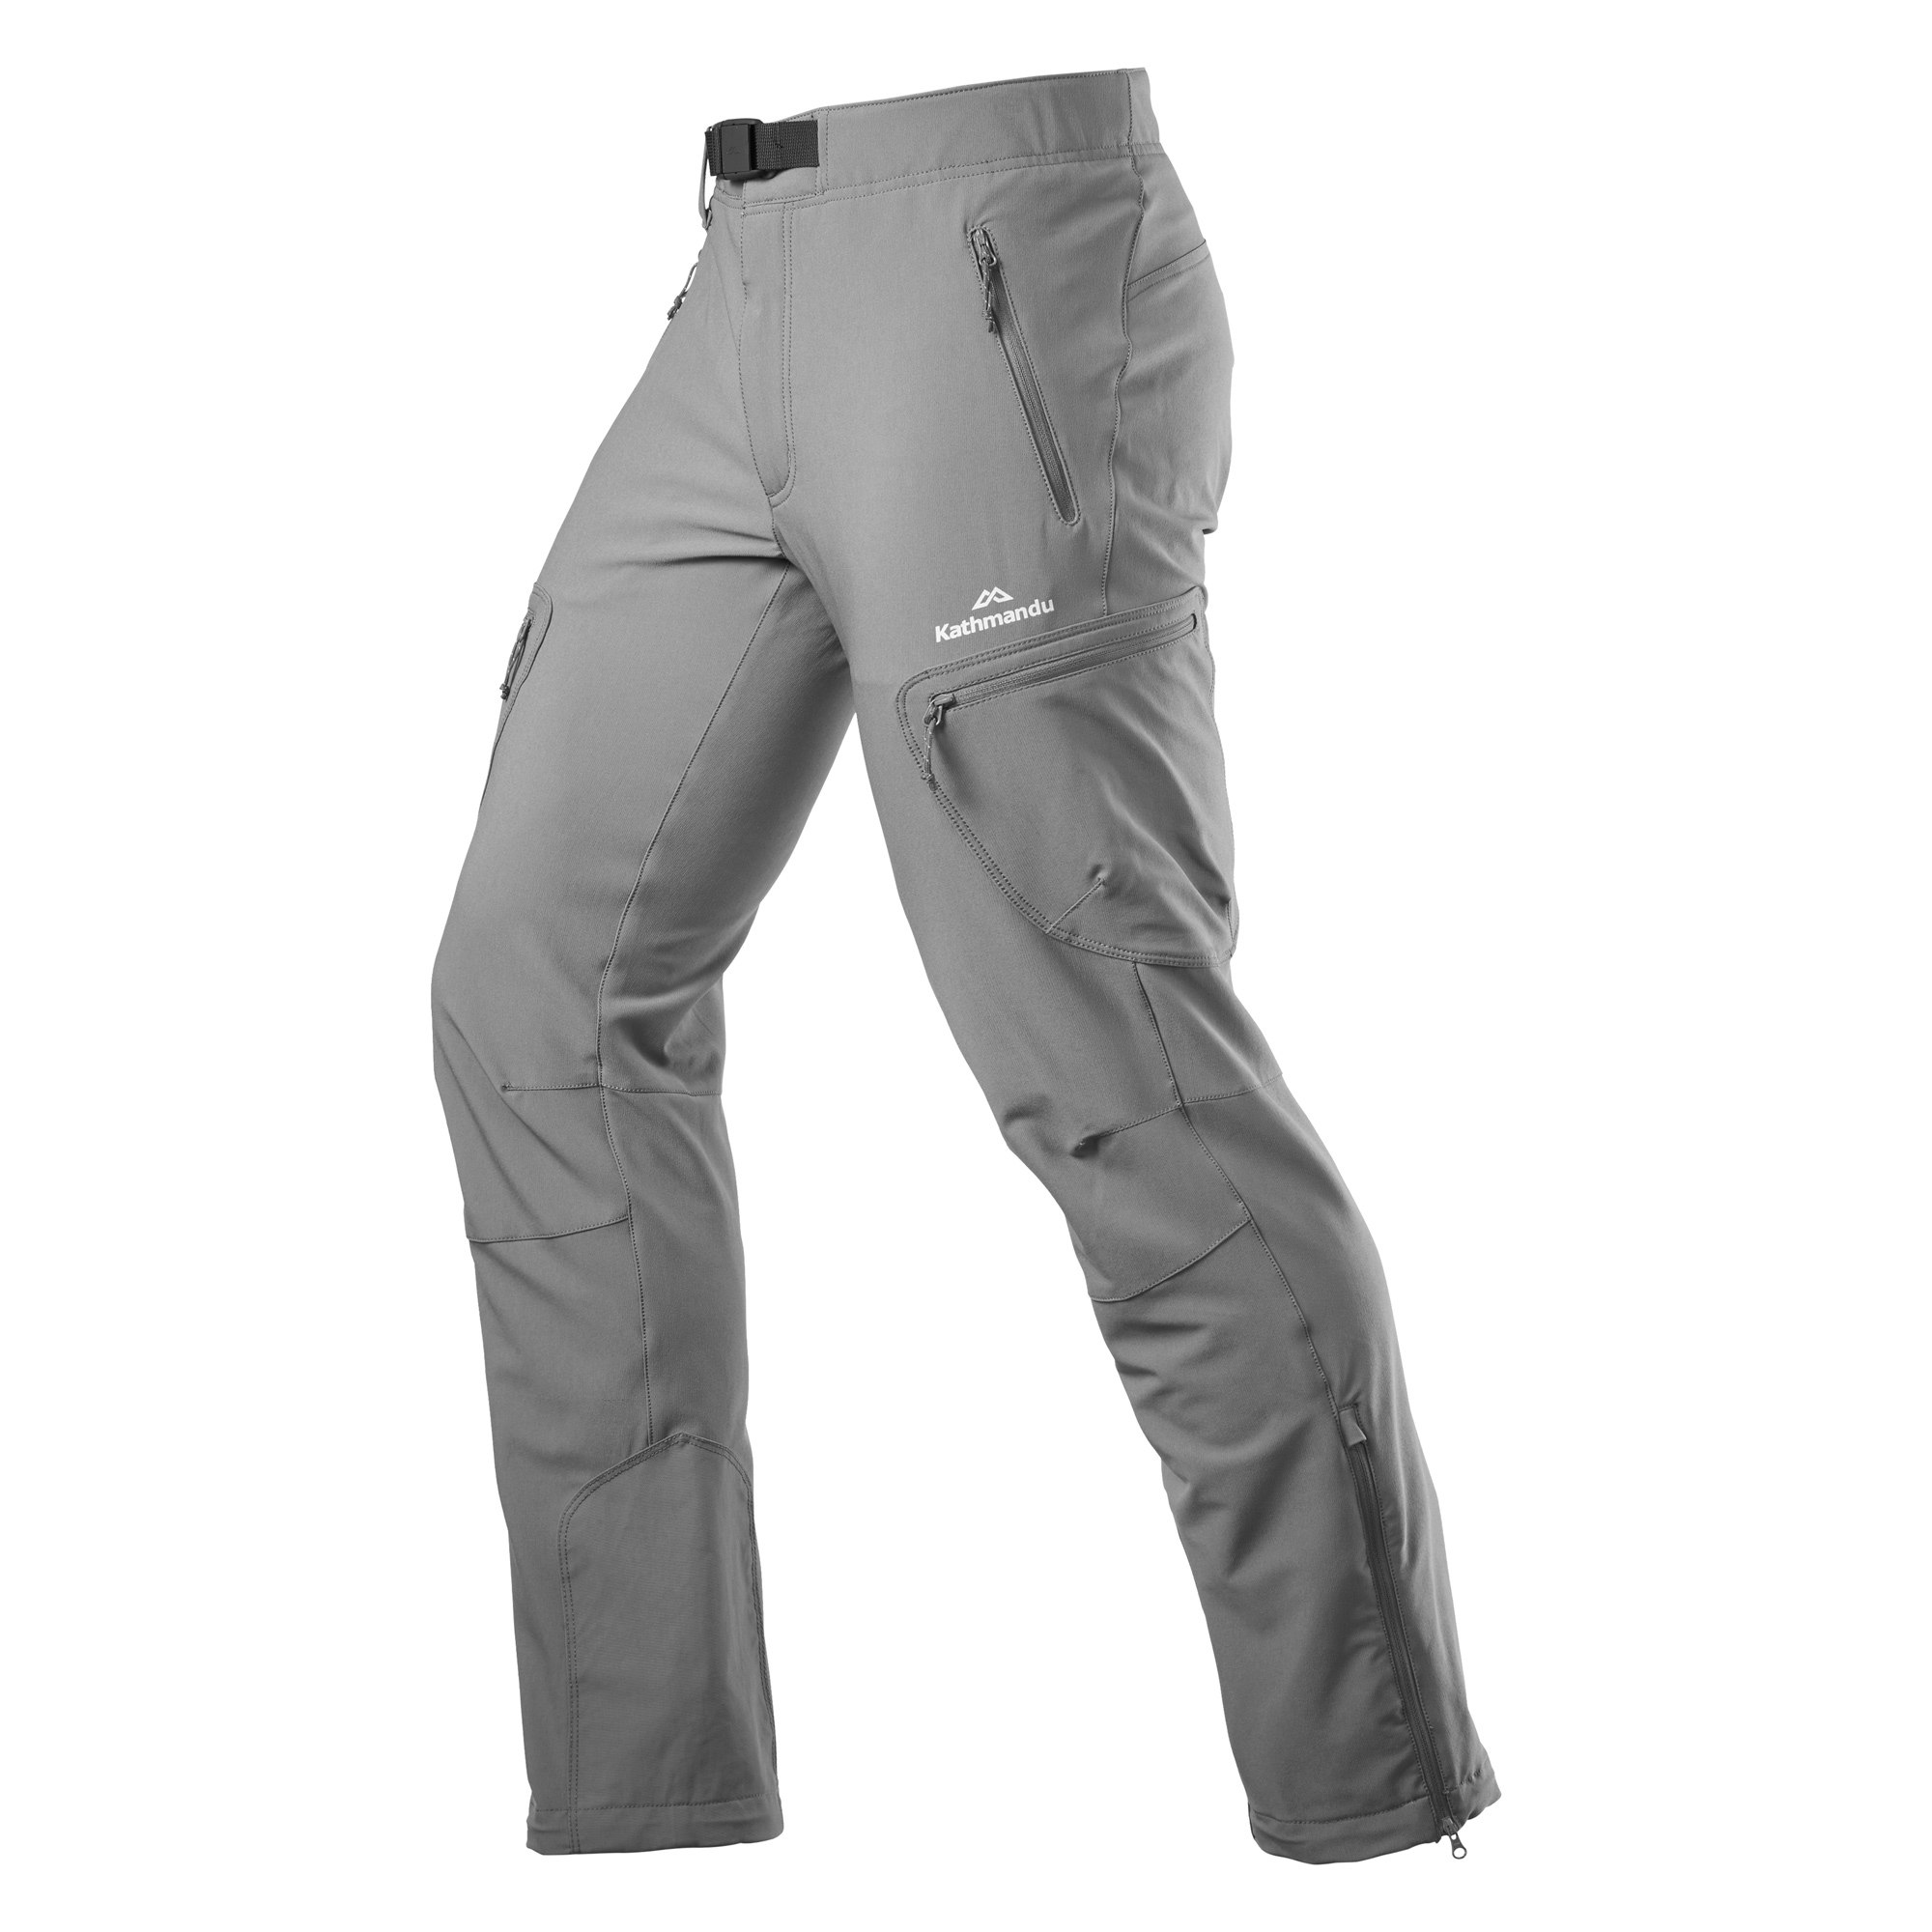 2017 mens pants Loose army tactical pants Multi pocket